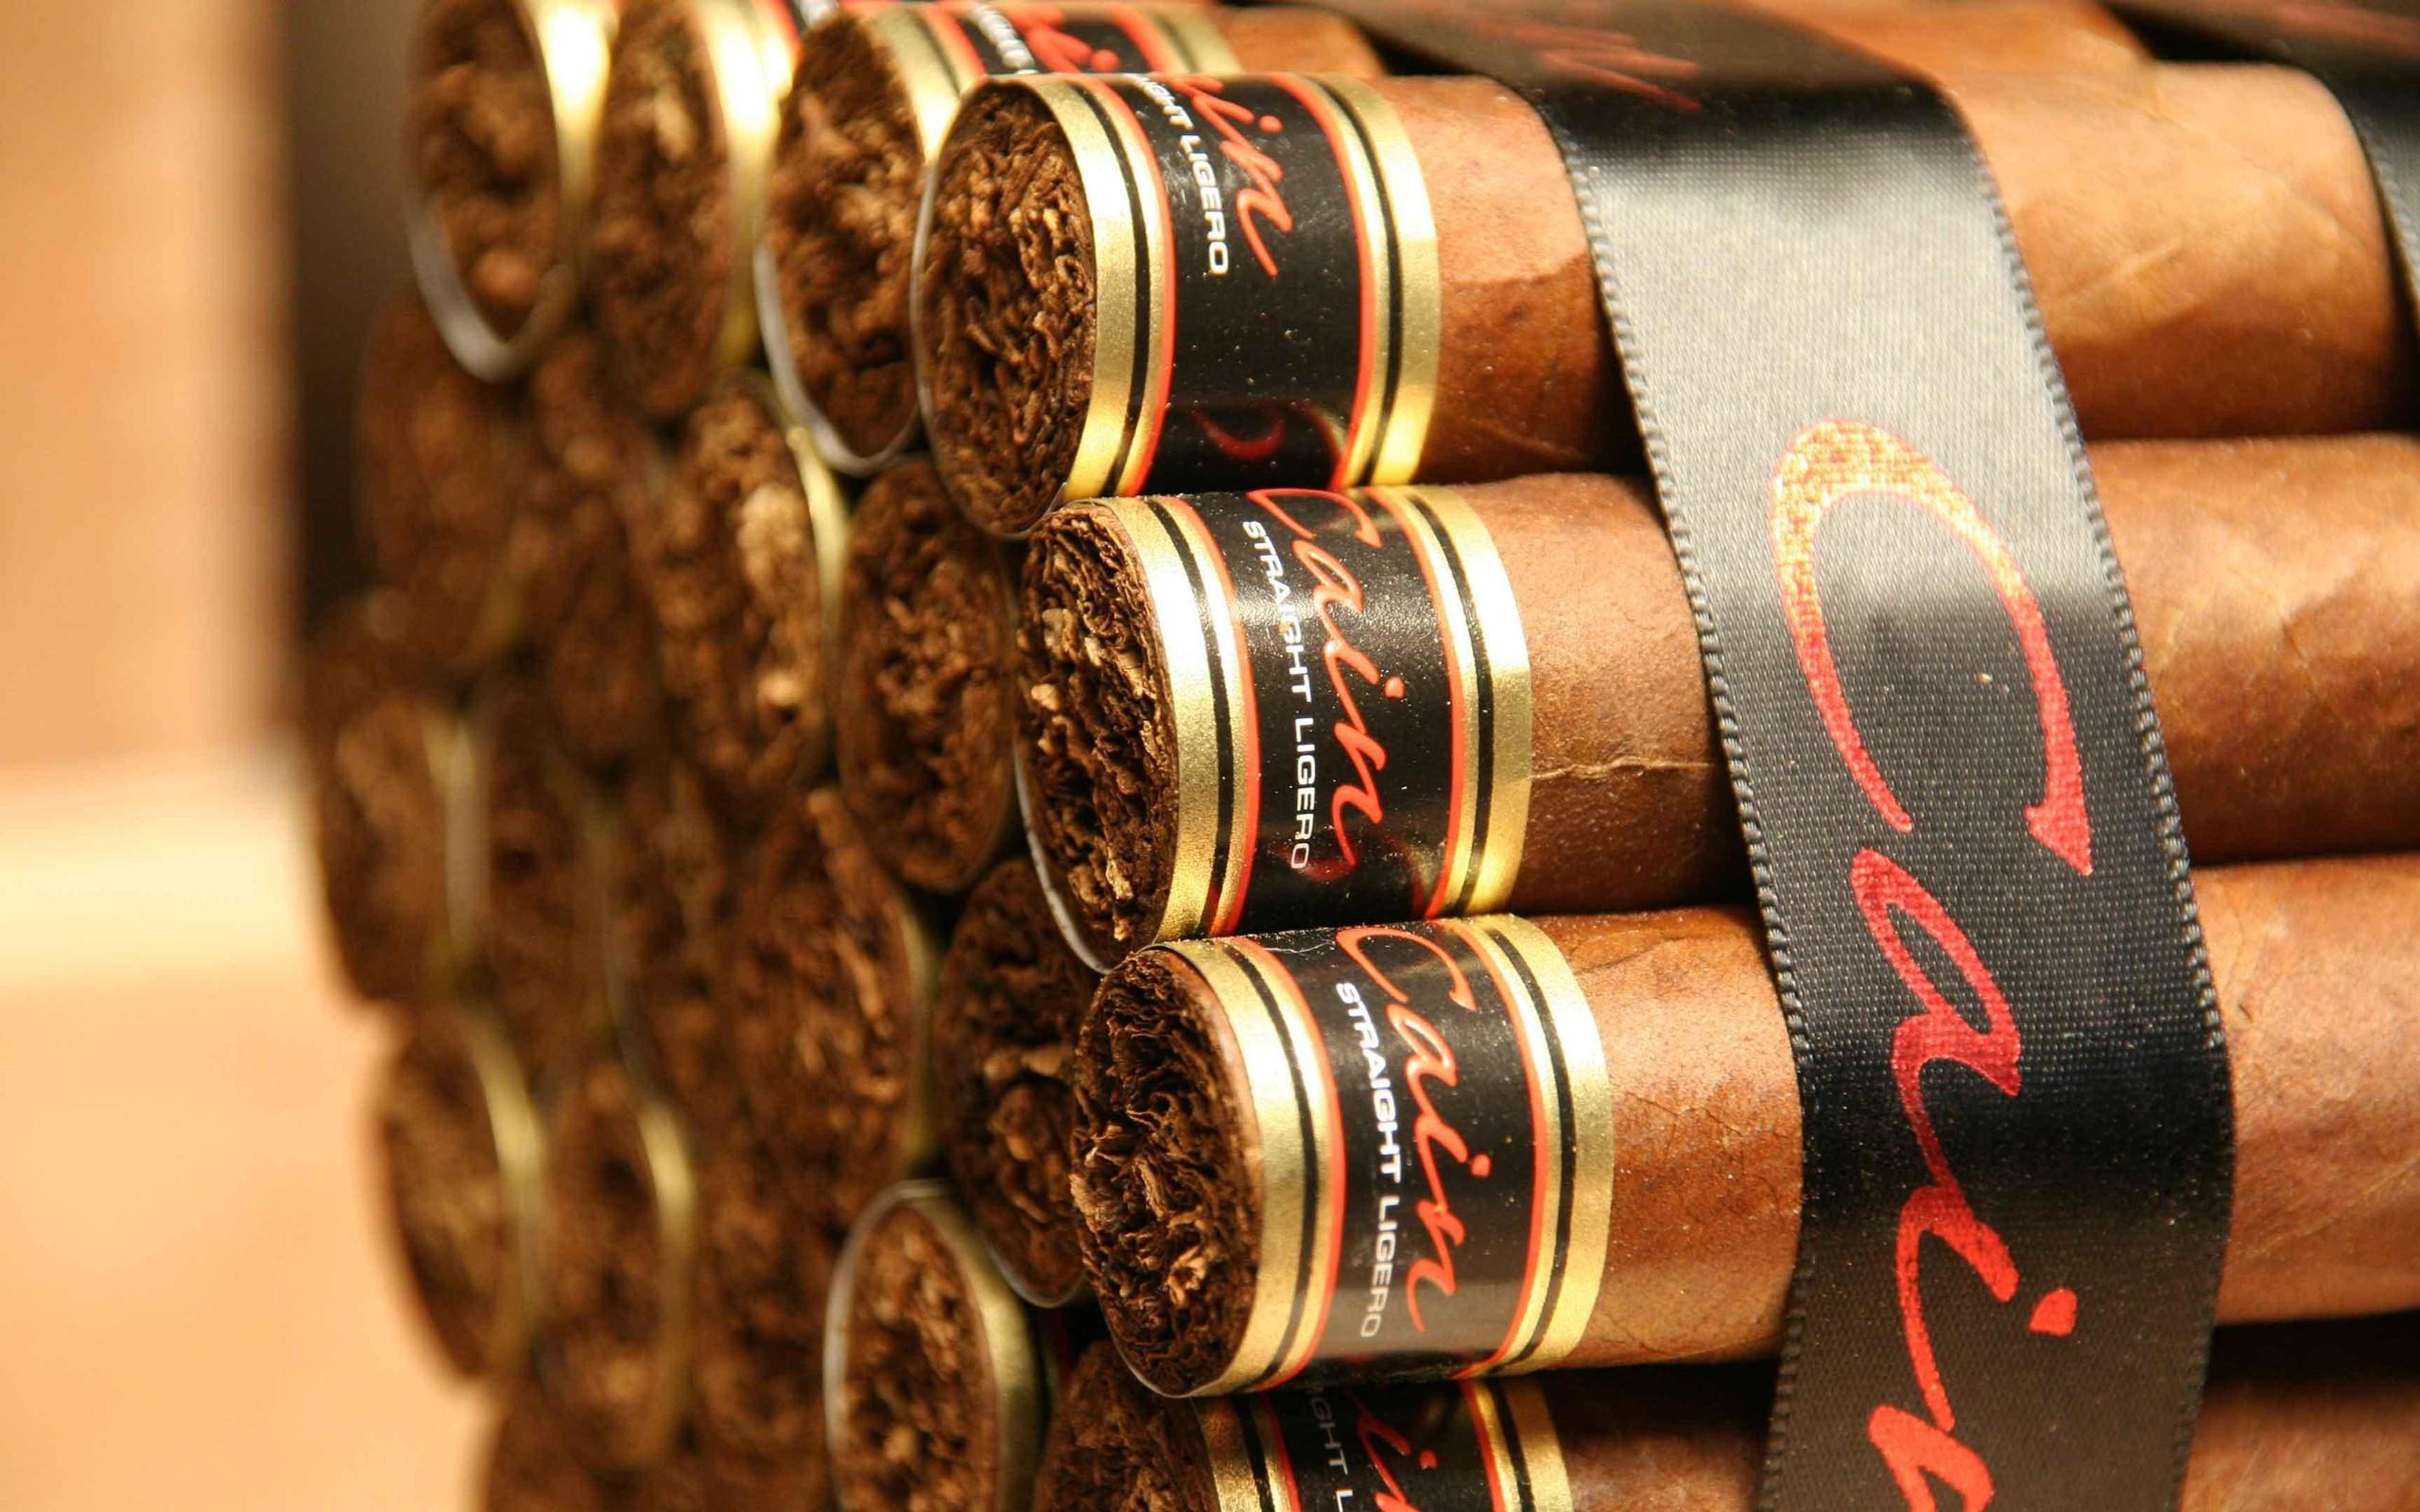 HD wallpaper, Cigars, Closeup, Brown, Tobacco, Photography